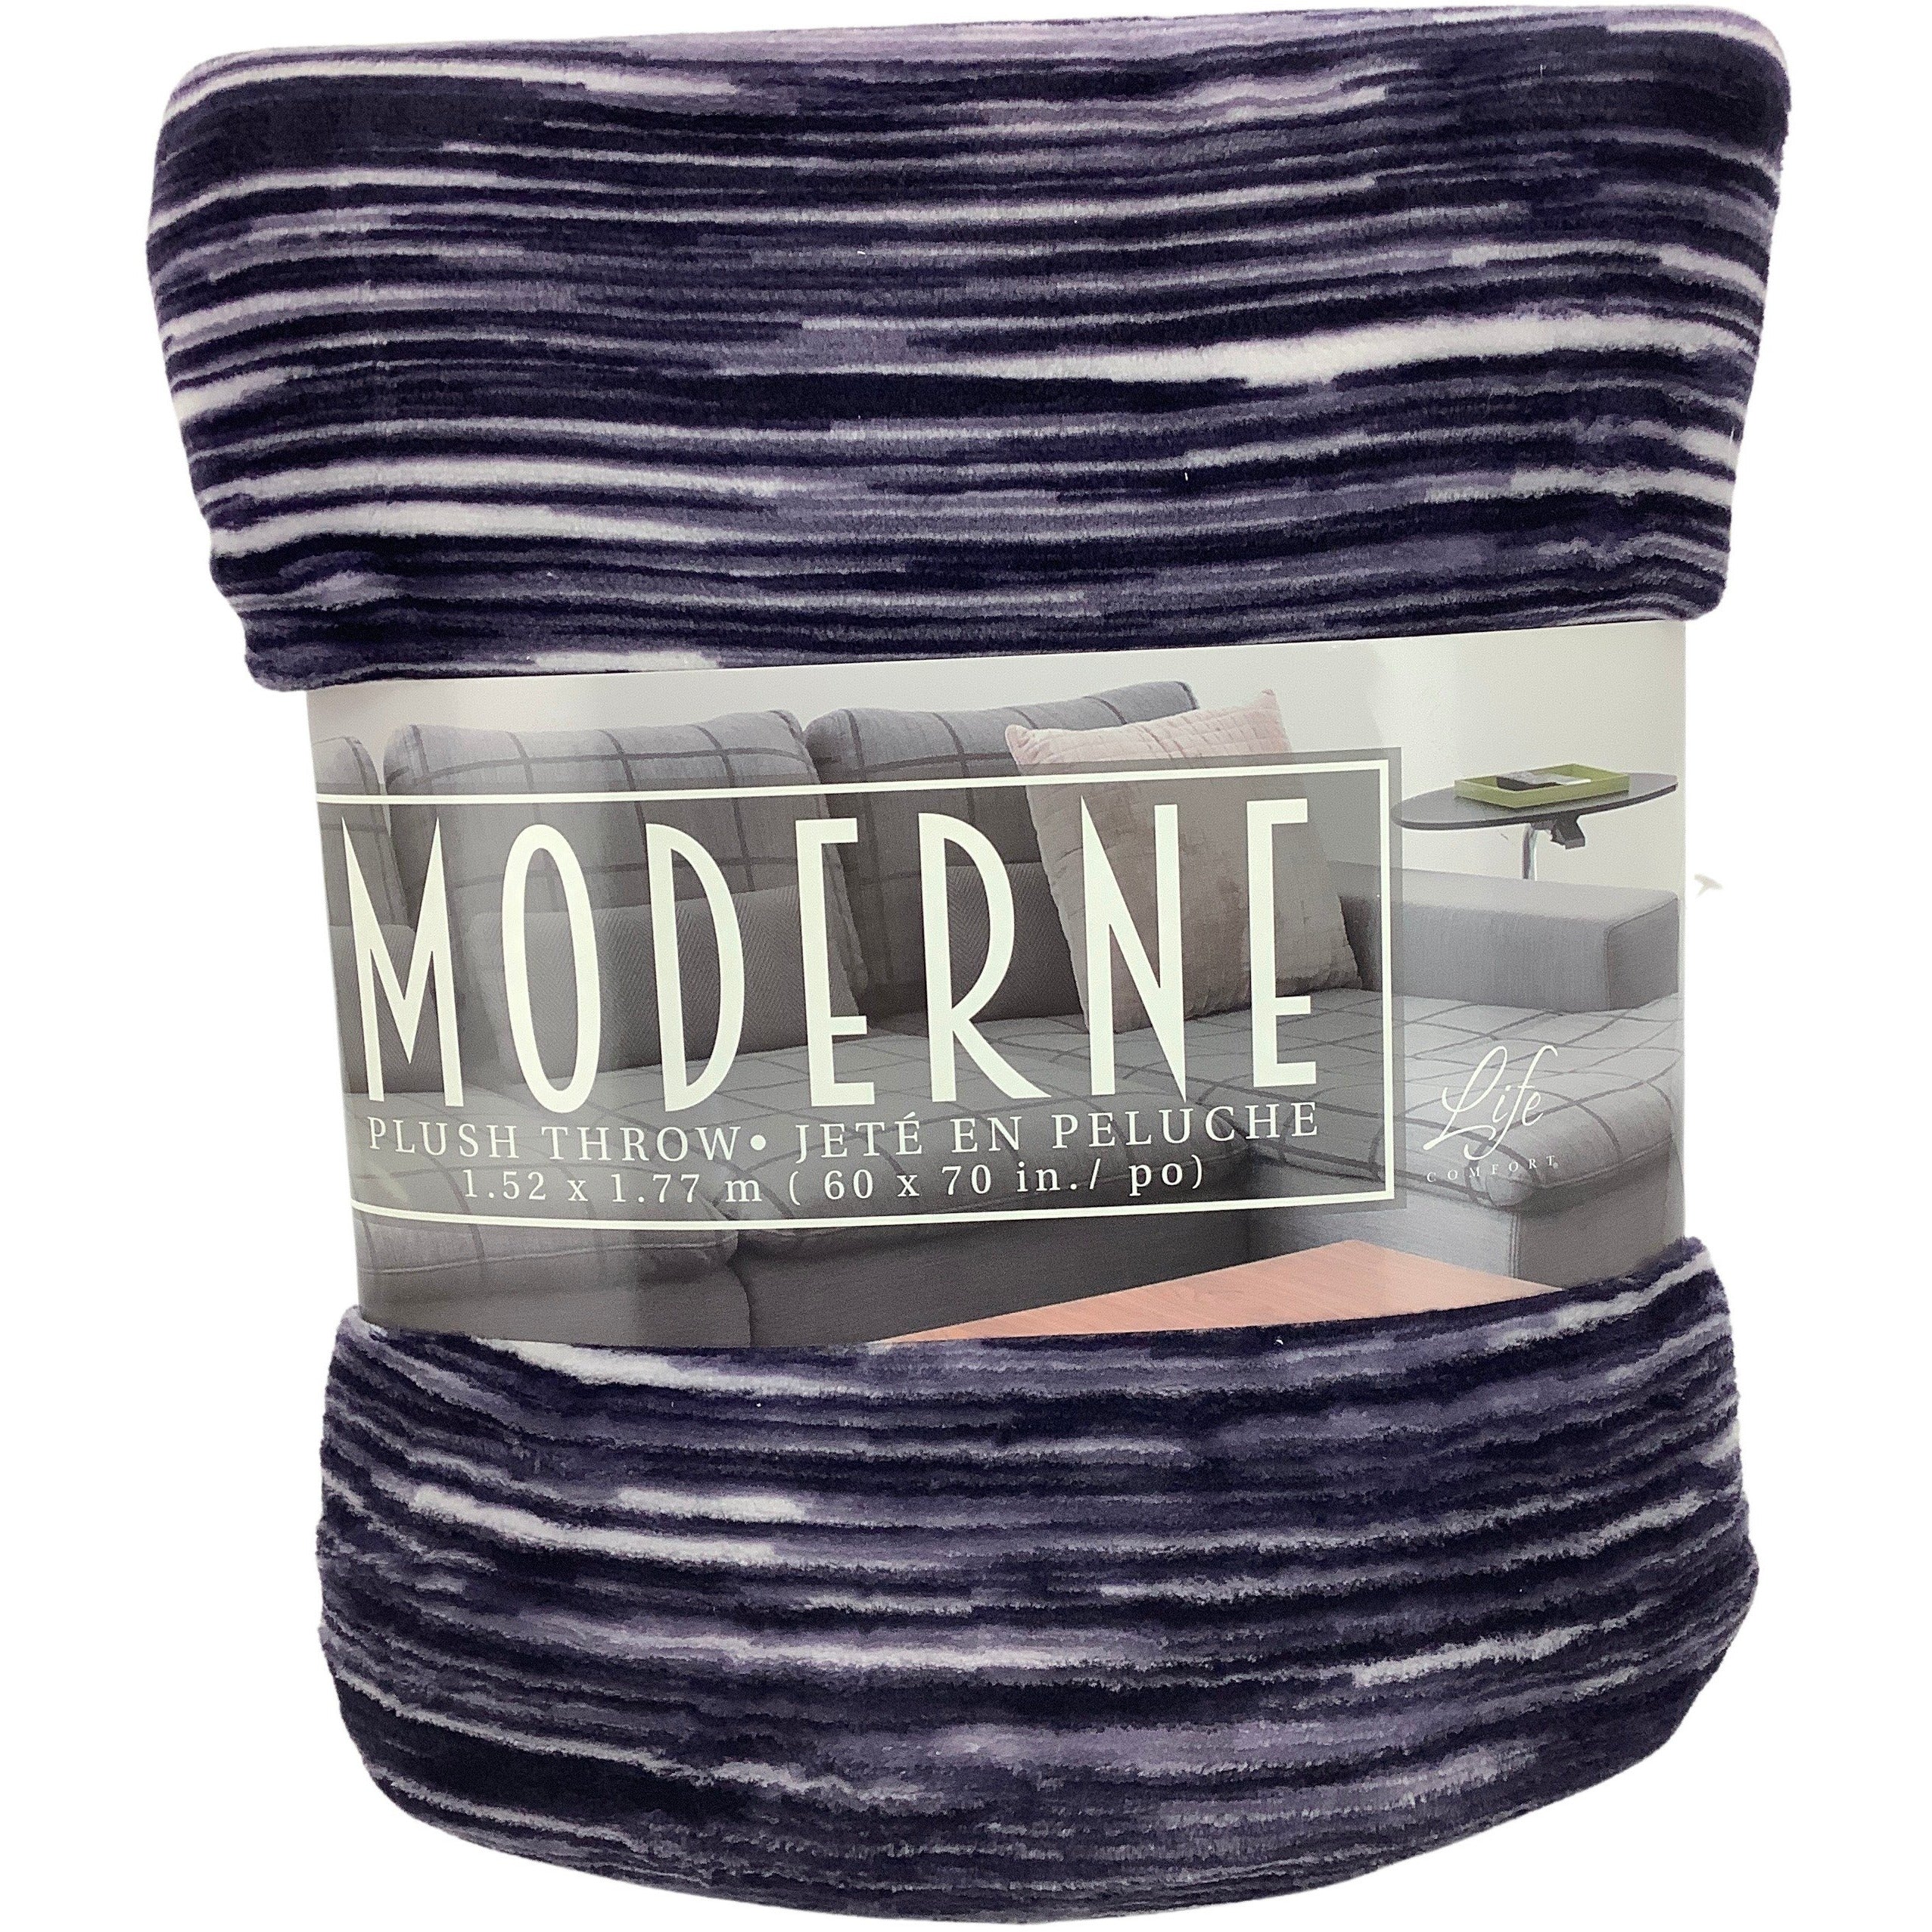 Life Comfort Moderne Plush Throw: Home Accent: Purple